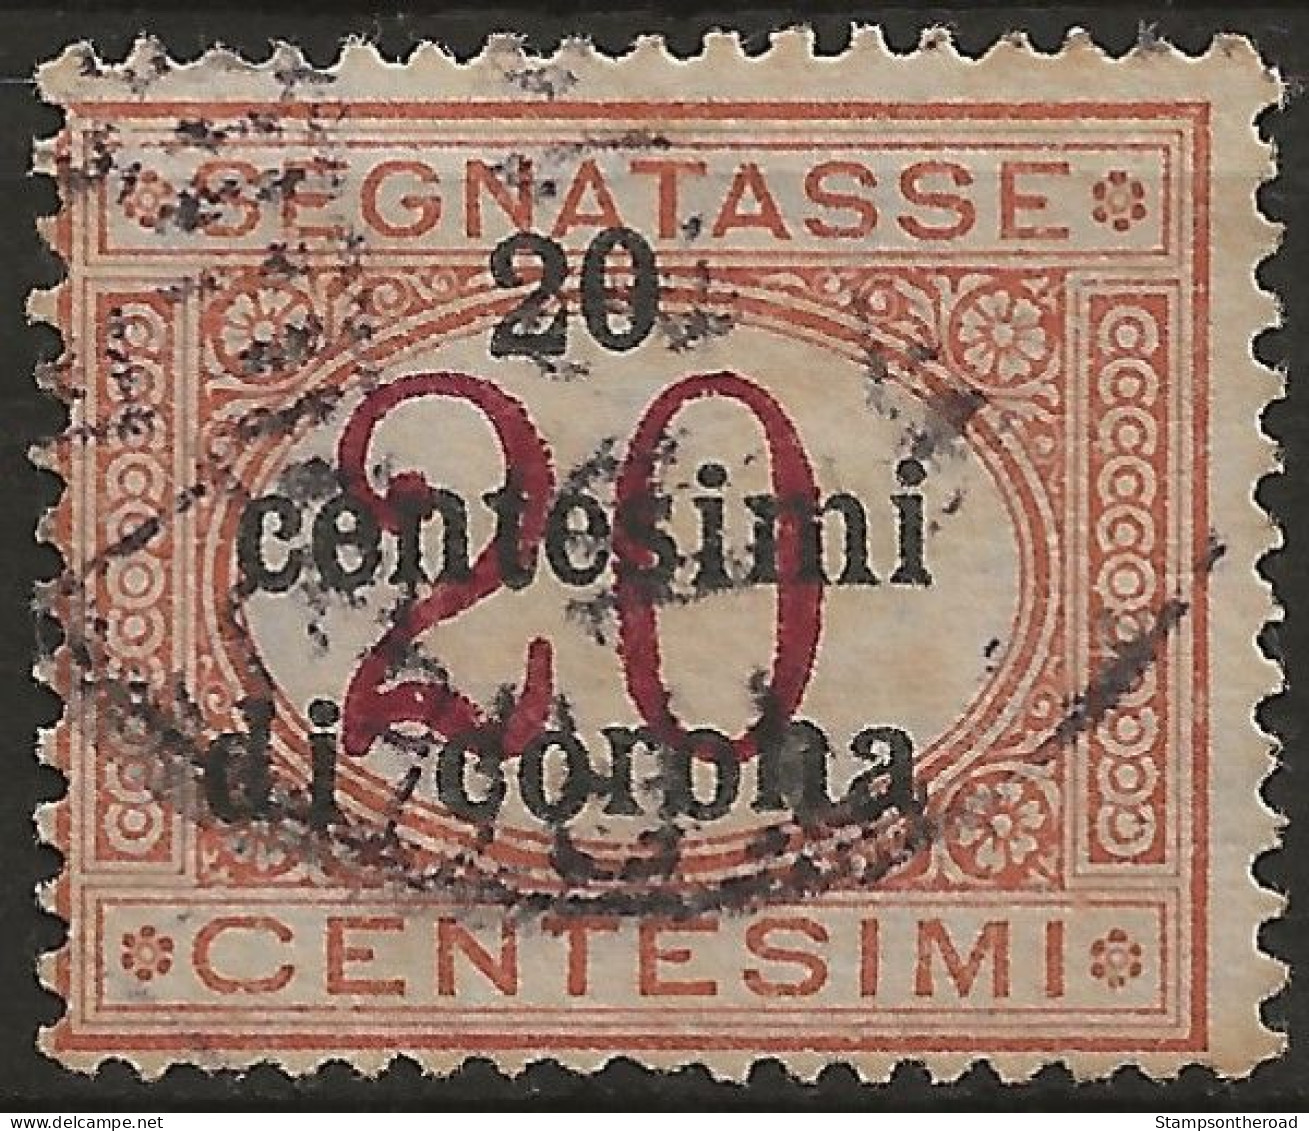 TRTTSx3U6,1919 Terre Redente - Trento E Trieste, Sassone Nr. 3, Segnatasse Usato Per Posta °/ - Trentin & Trieste